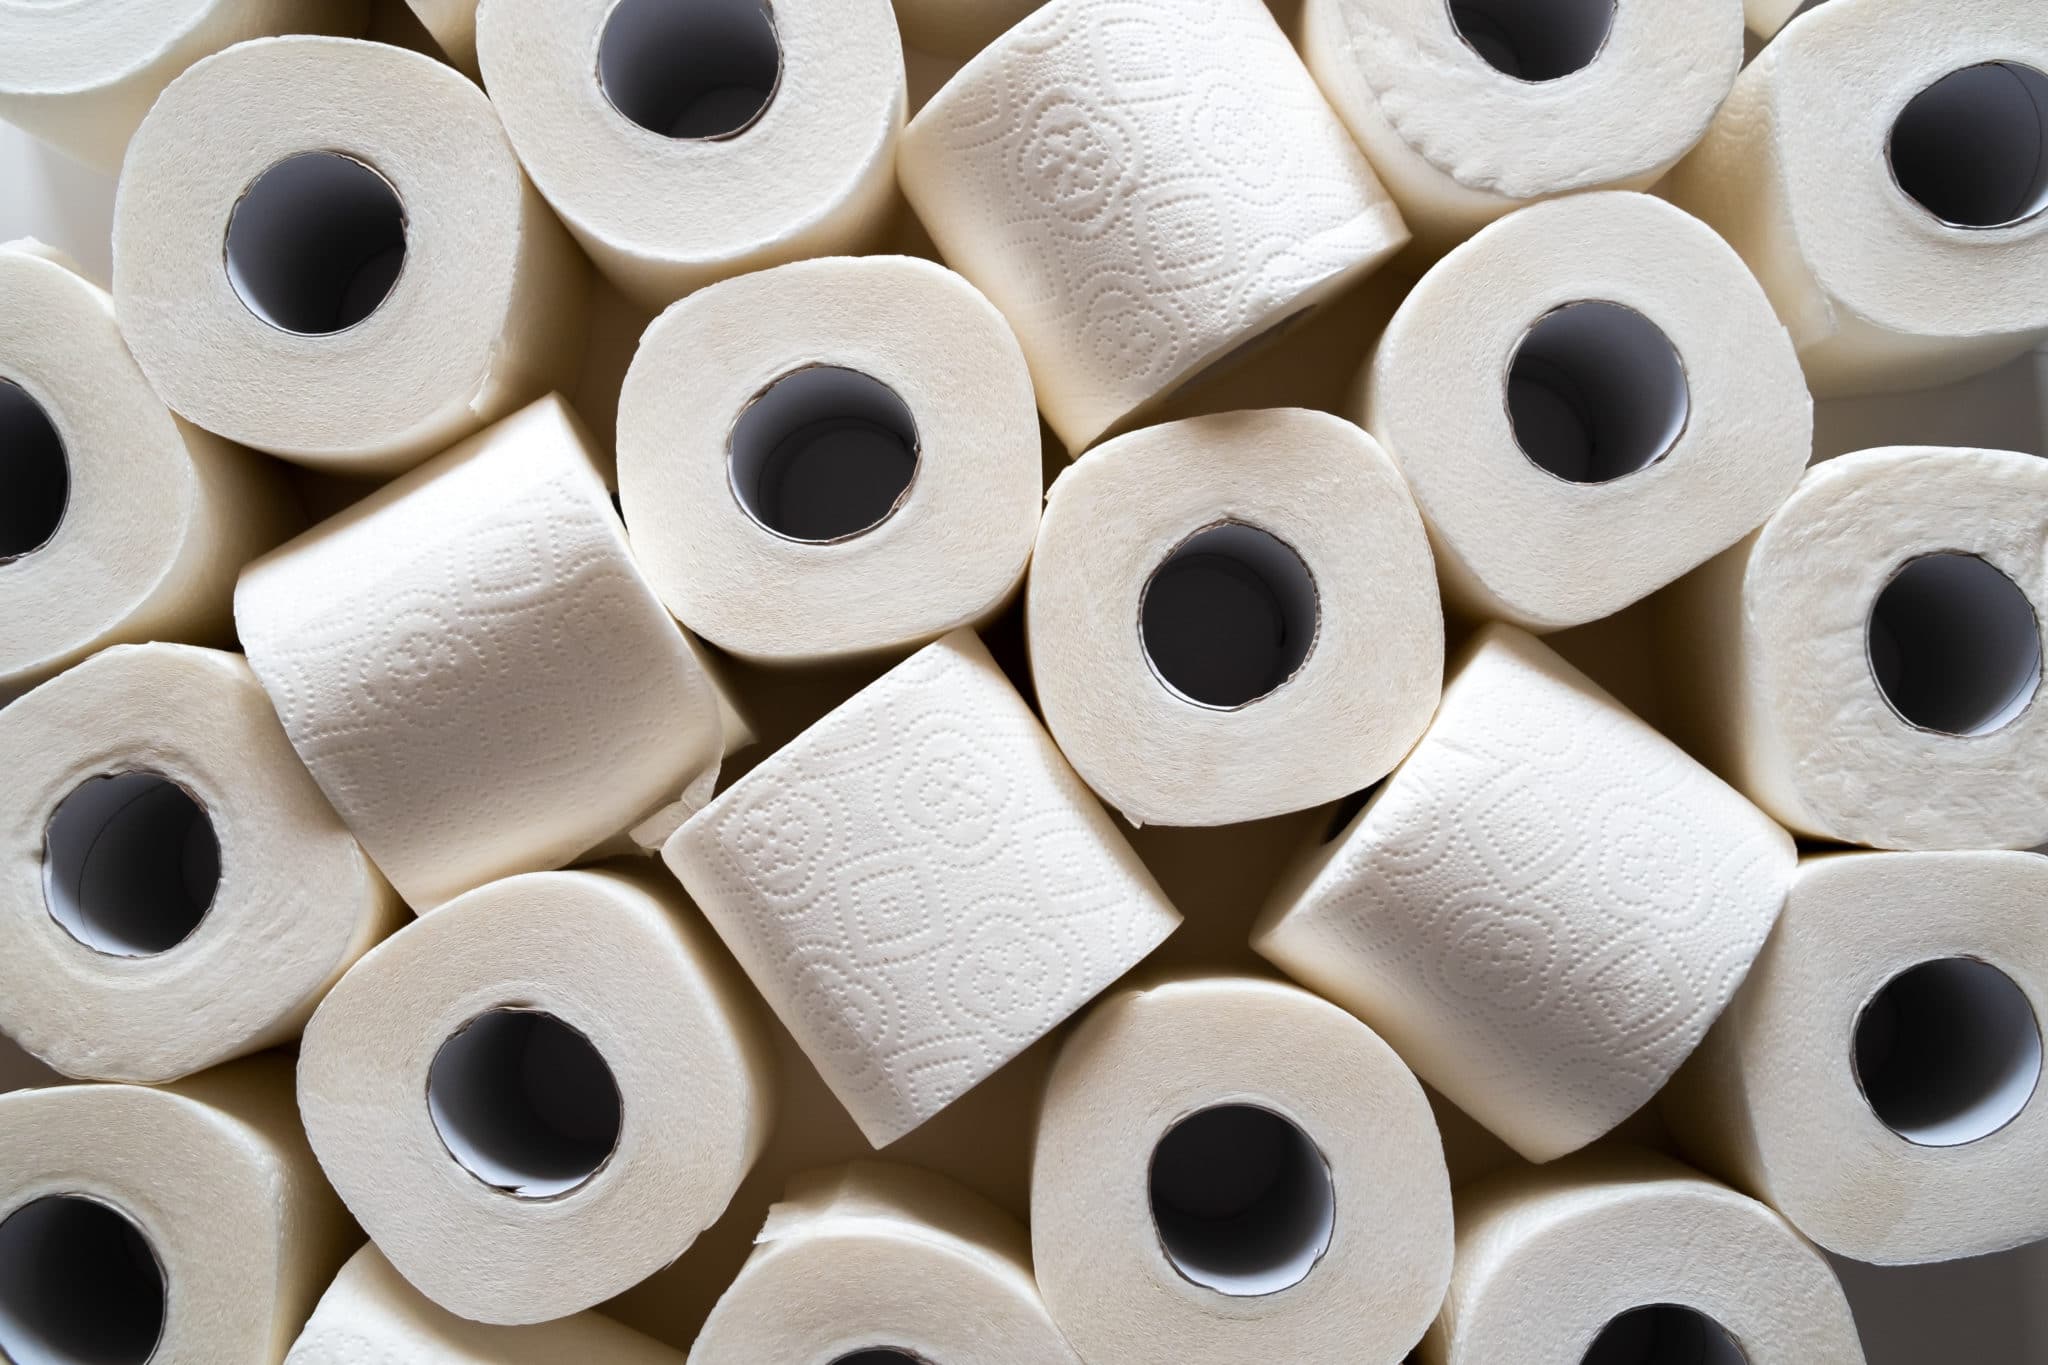 RV toilet paper in a huge pile